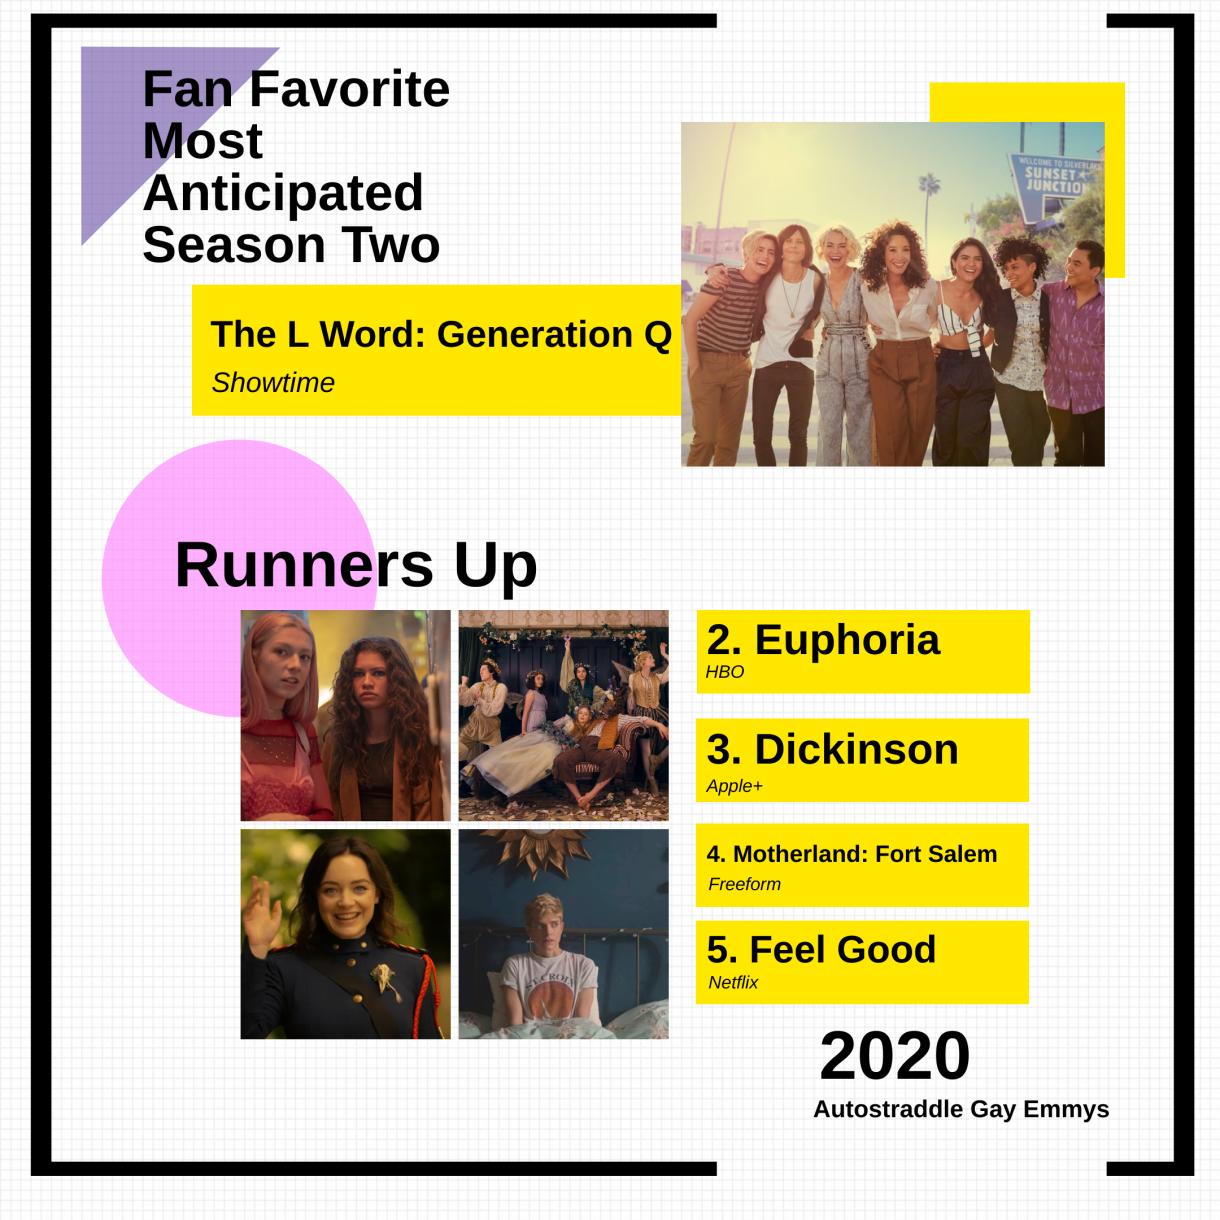 Fan Favorite Most Anticipated Season Two: 1. The L Word Generation Q, 2. Euphoria (HBO), 3. Dickinson (Apple+), 4. Motherland: Fort Salem (Freeform), 5. Feel Good (Netflix)